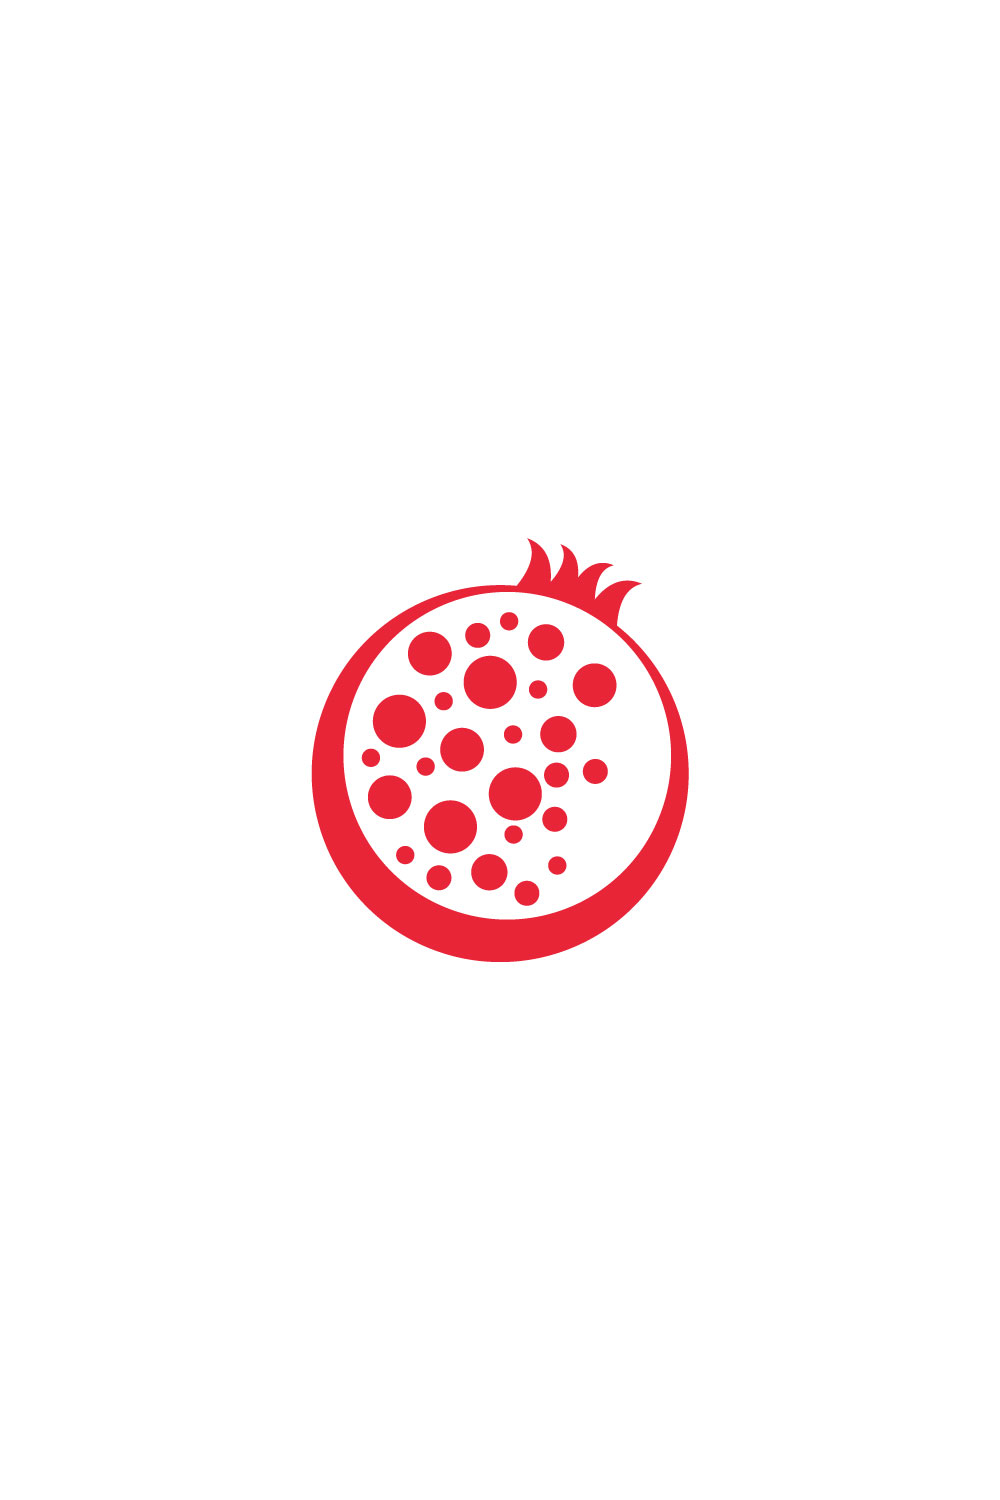 Pomegranate Logo Vector Design Template pinterest image.